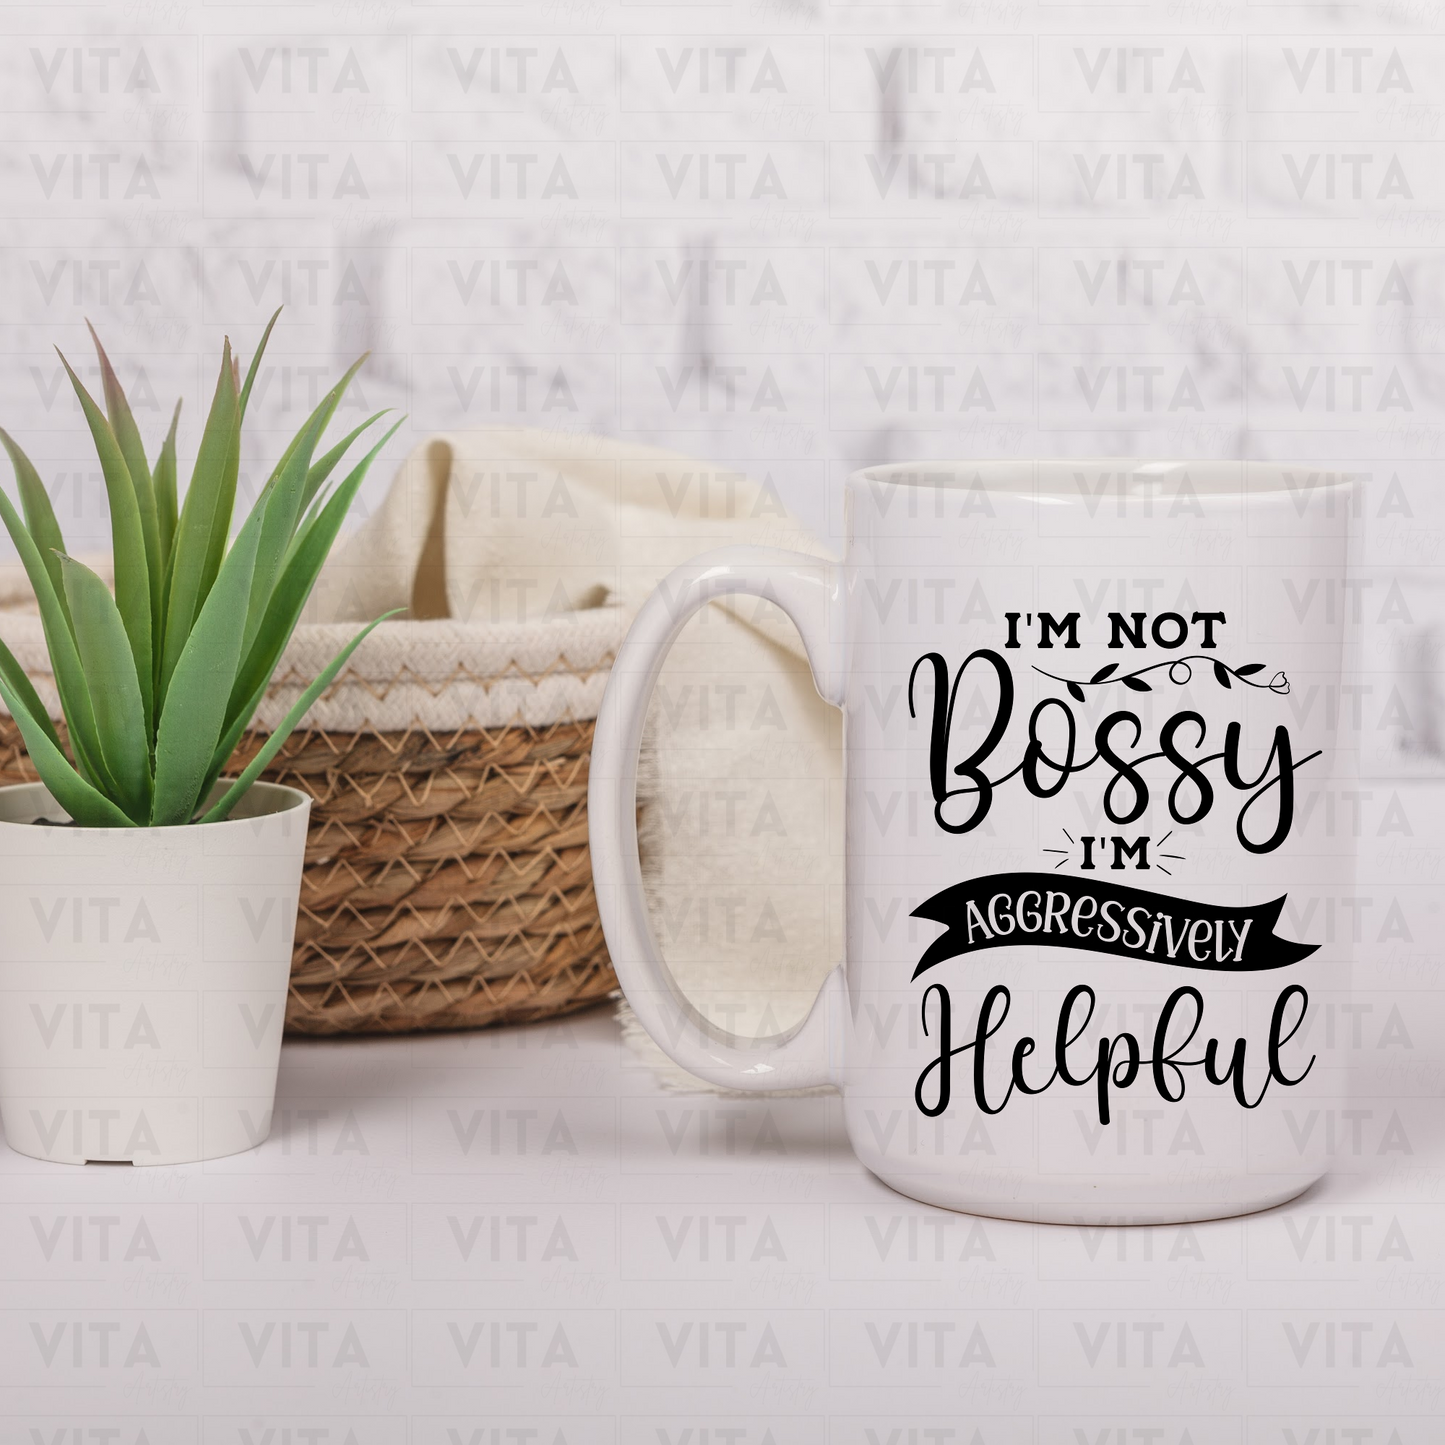 I'm Not Bossy I'm Aggressively Helpful - Sarcastic Ceramic Mug